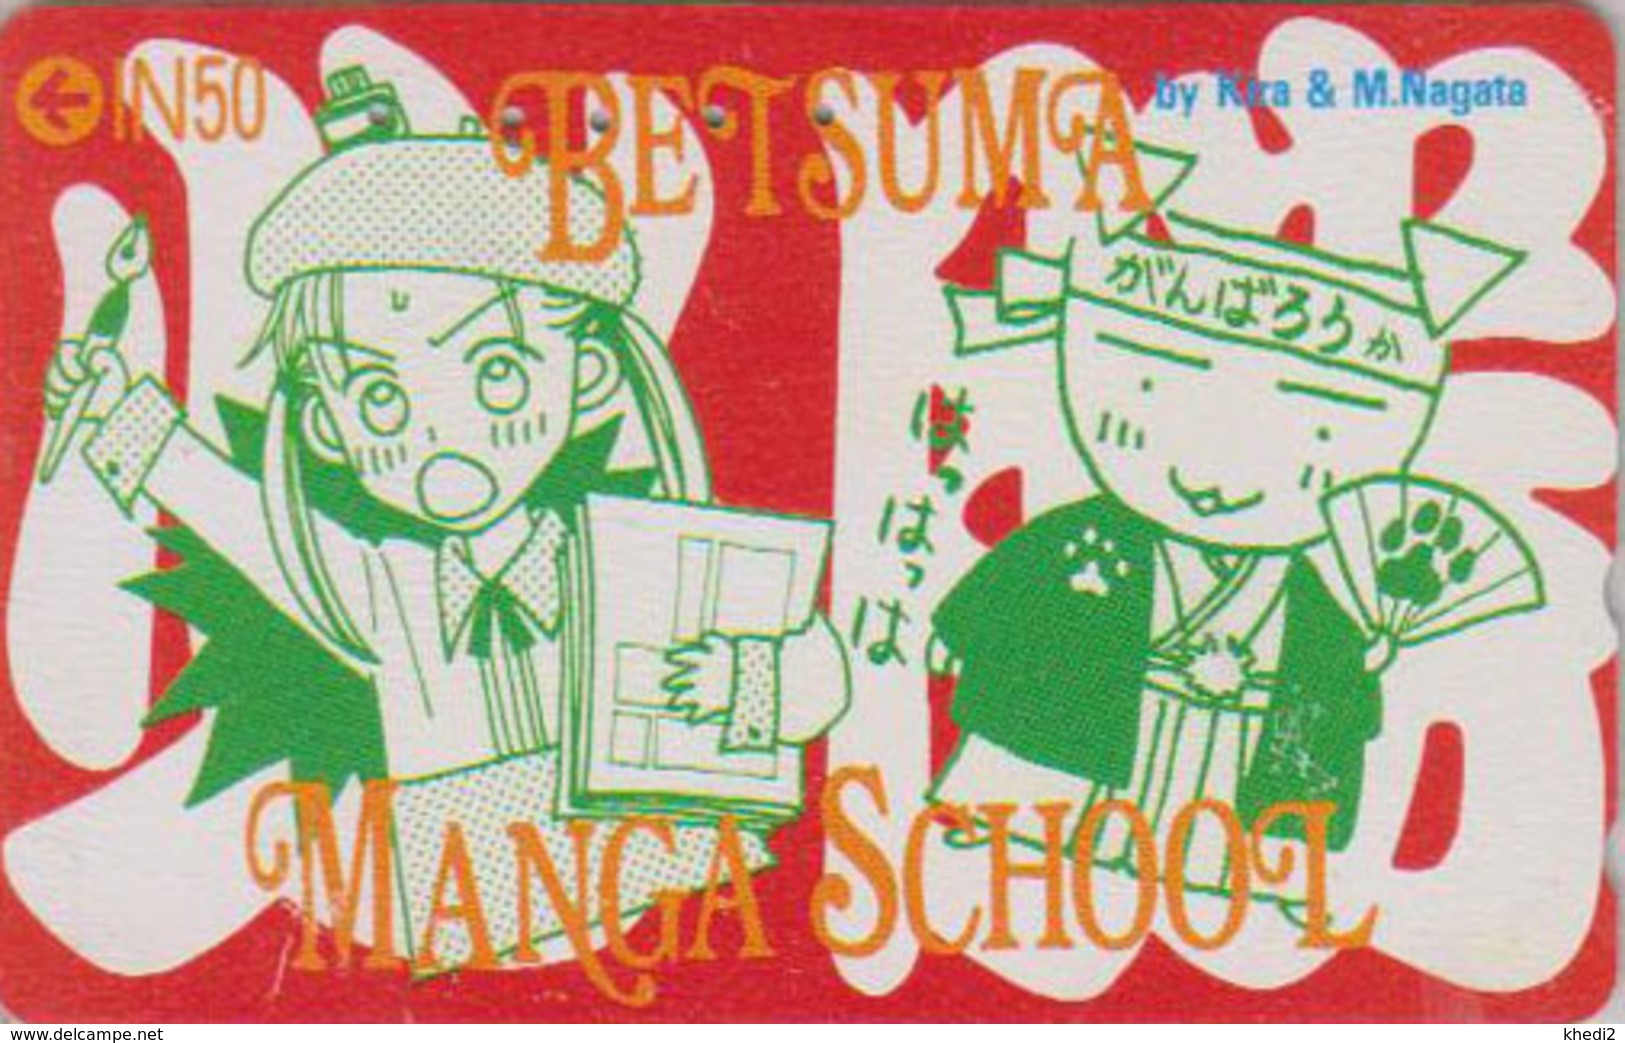 Télécarte Japon / 110-011 - MANGA - BETSUMA * Manga School * - ANIME Japan Phonecard - BD COMICS Telefonkarte - 8969 - BD